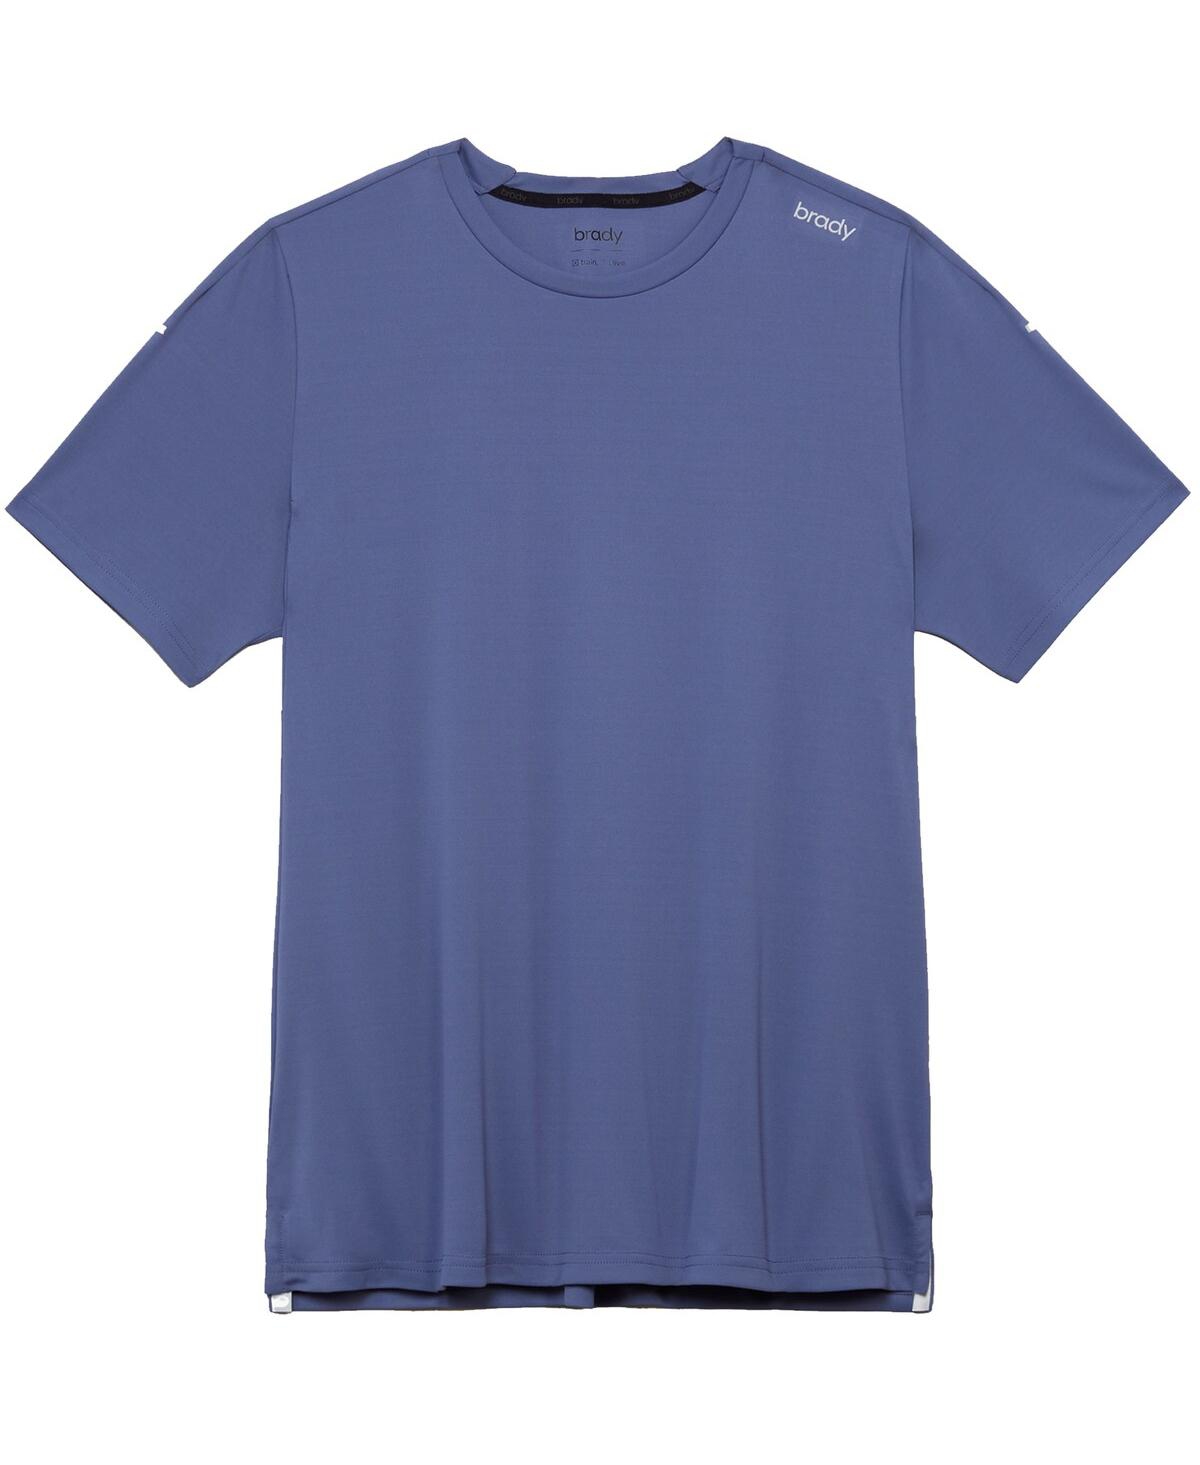 Men's Brady Blue Cool Touch Performance T-shirt - Blue